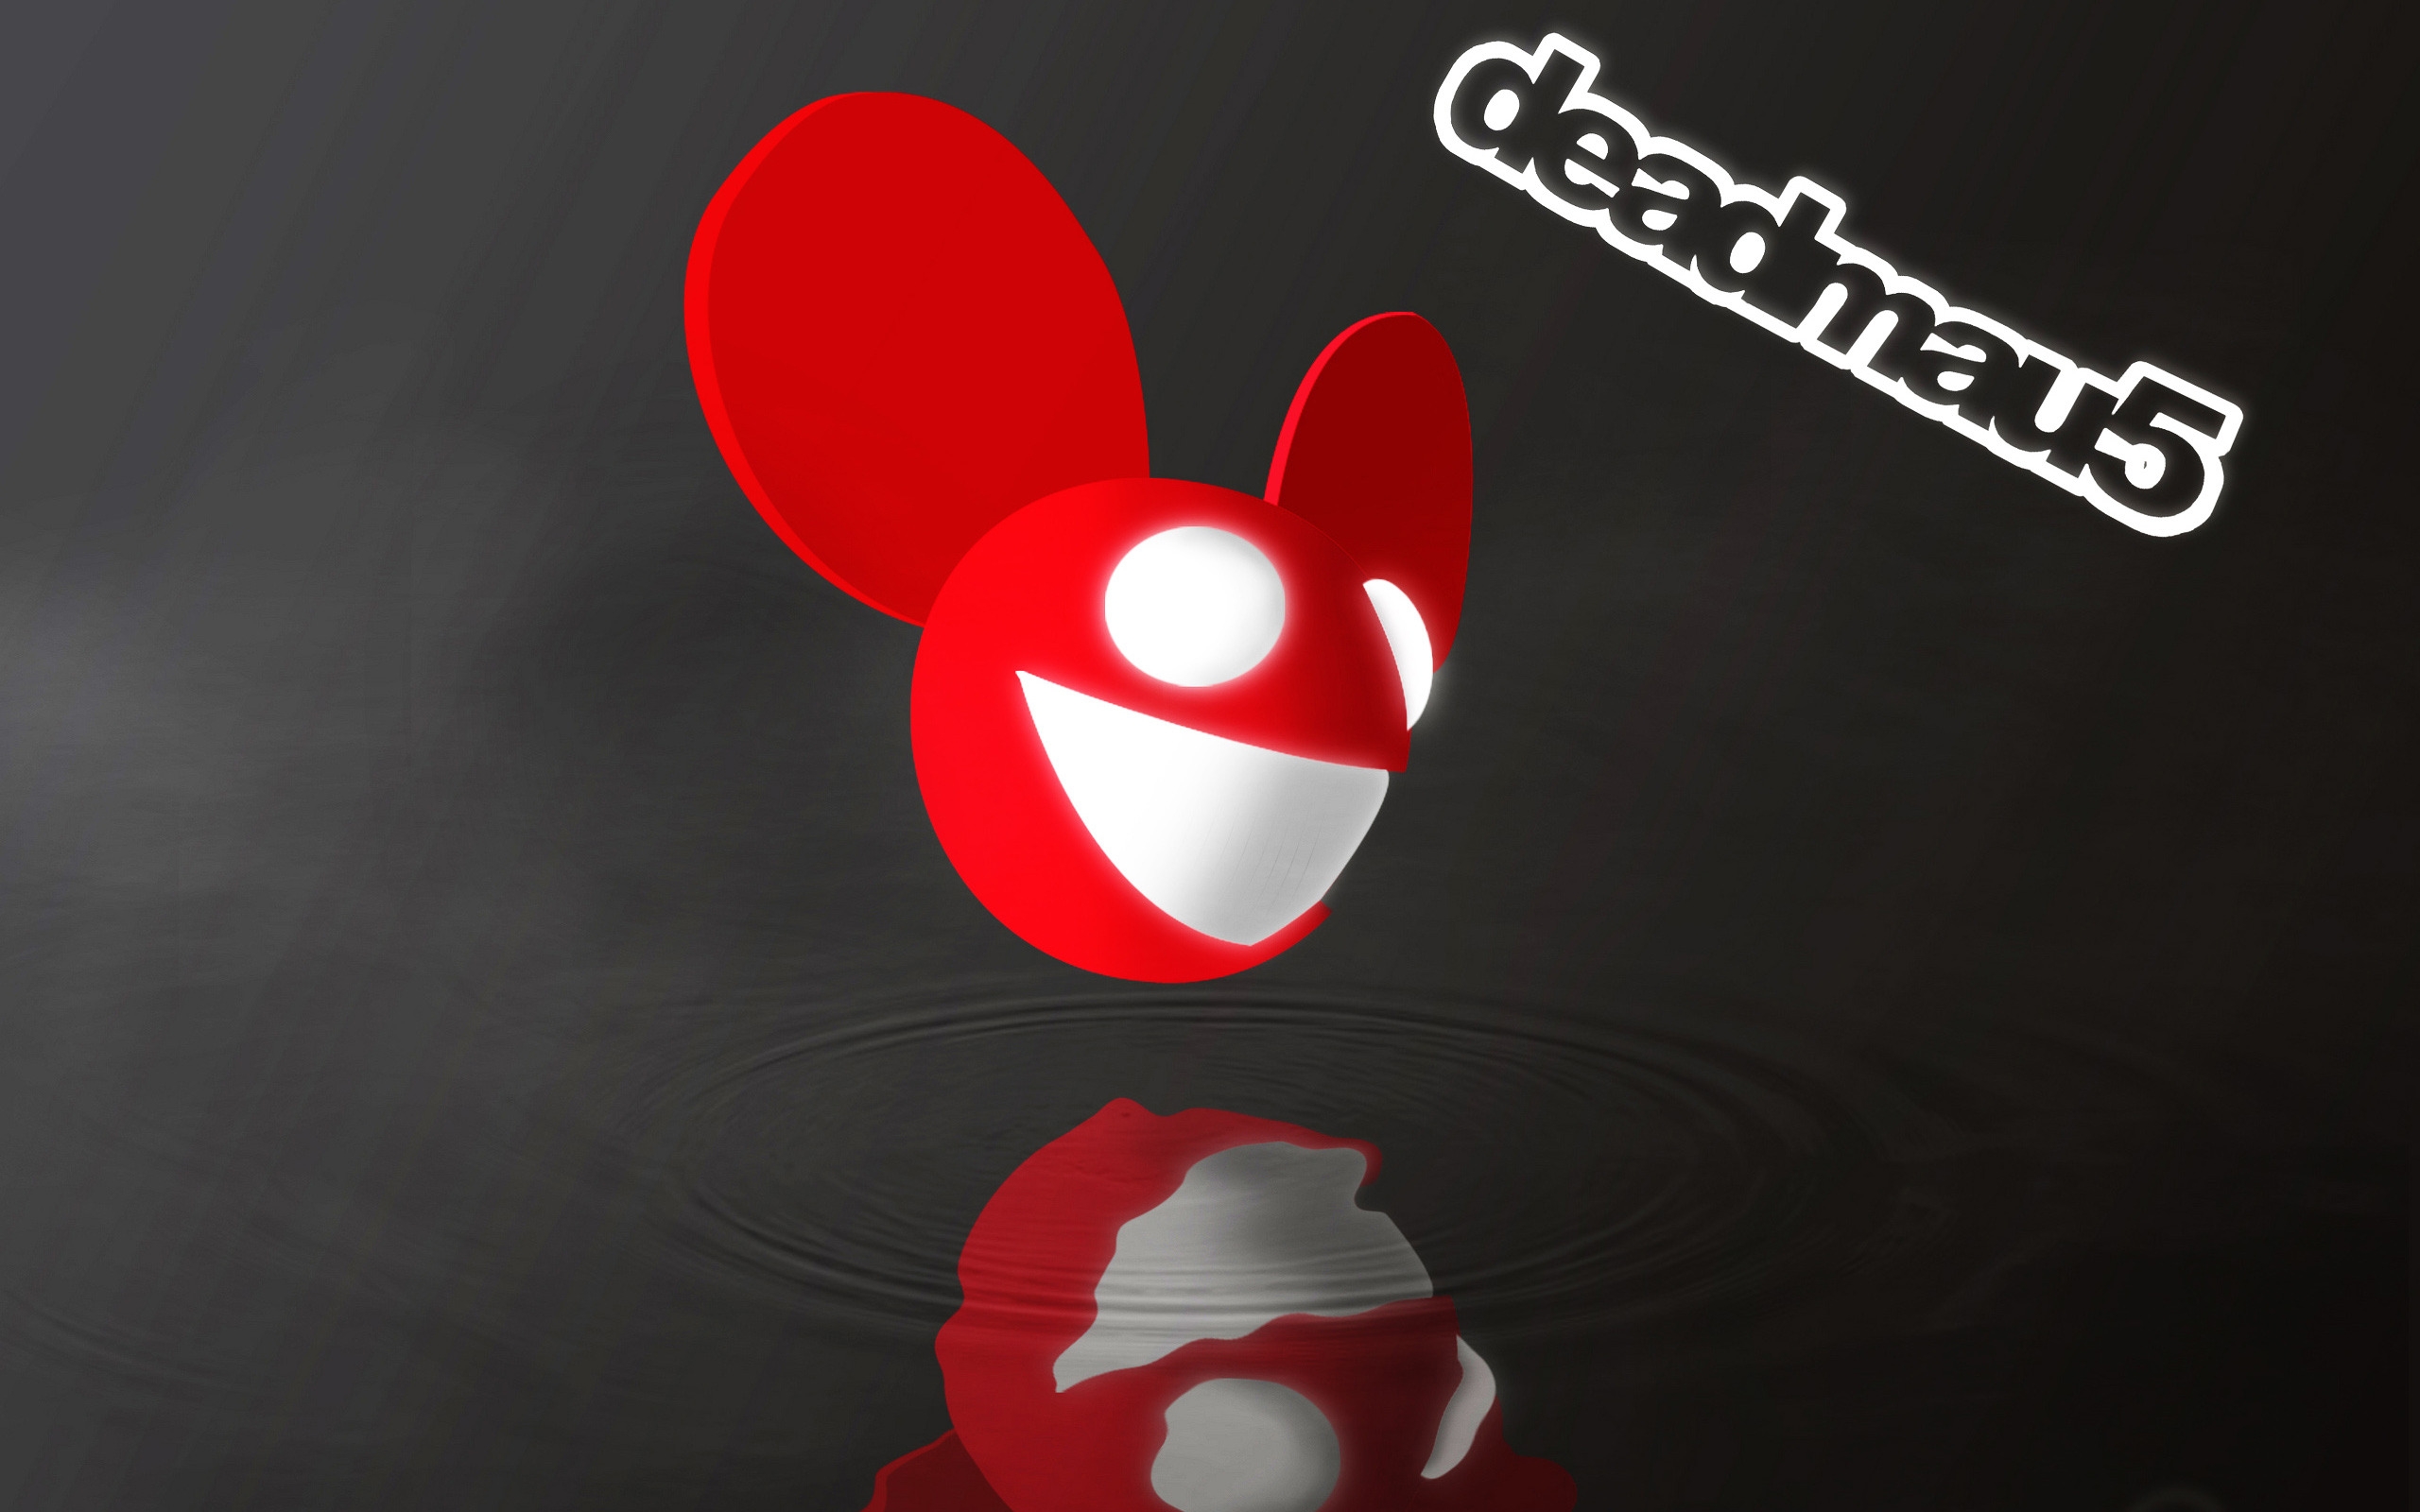 Deadmau5 Mascot for 2560 x 1600 widescreen resolution